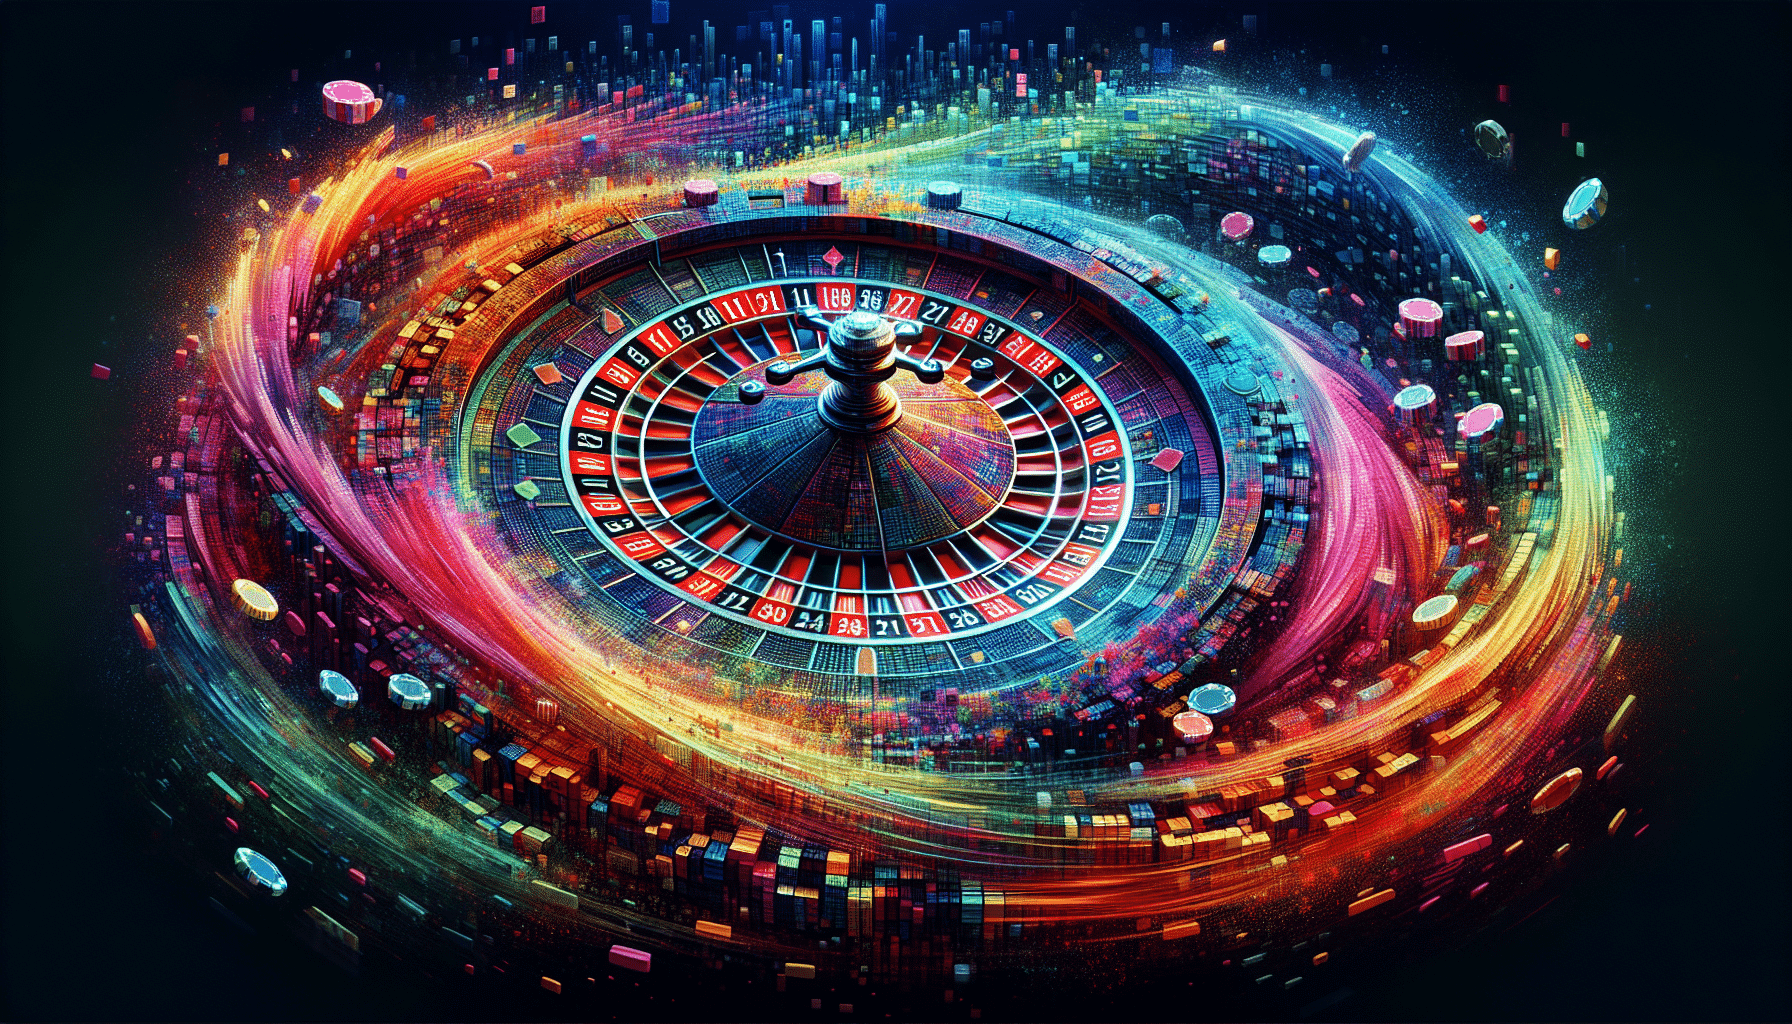 Artistic representation of online roulette wheel